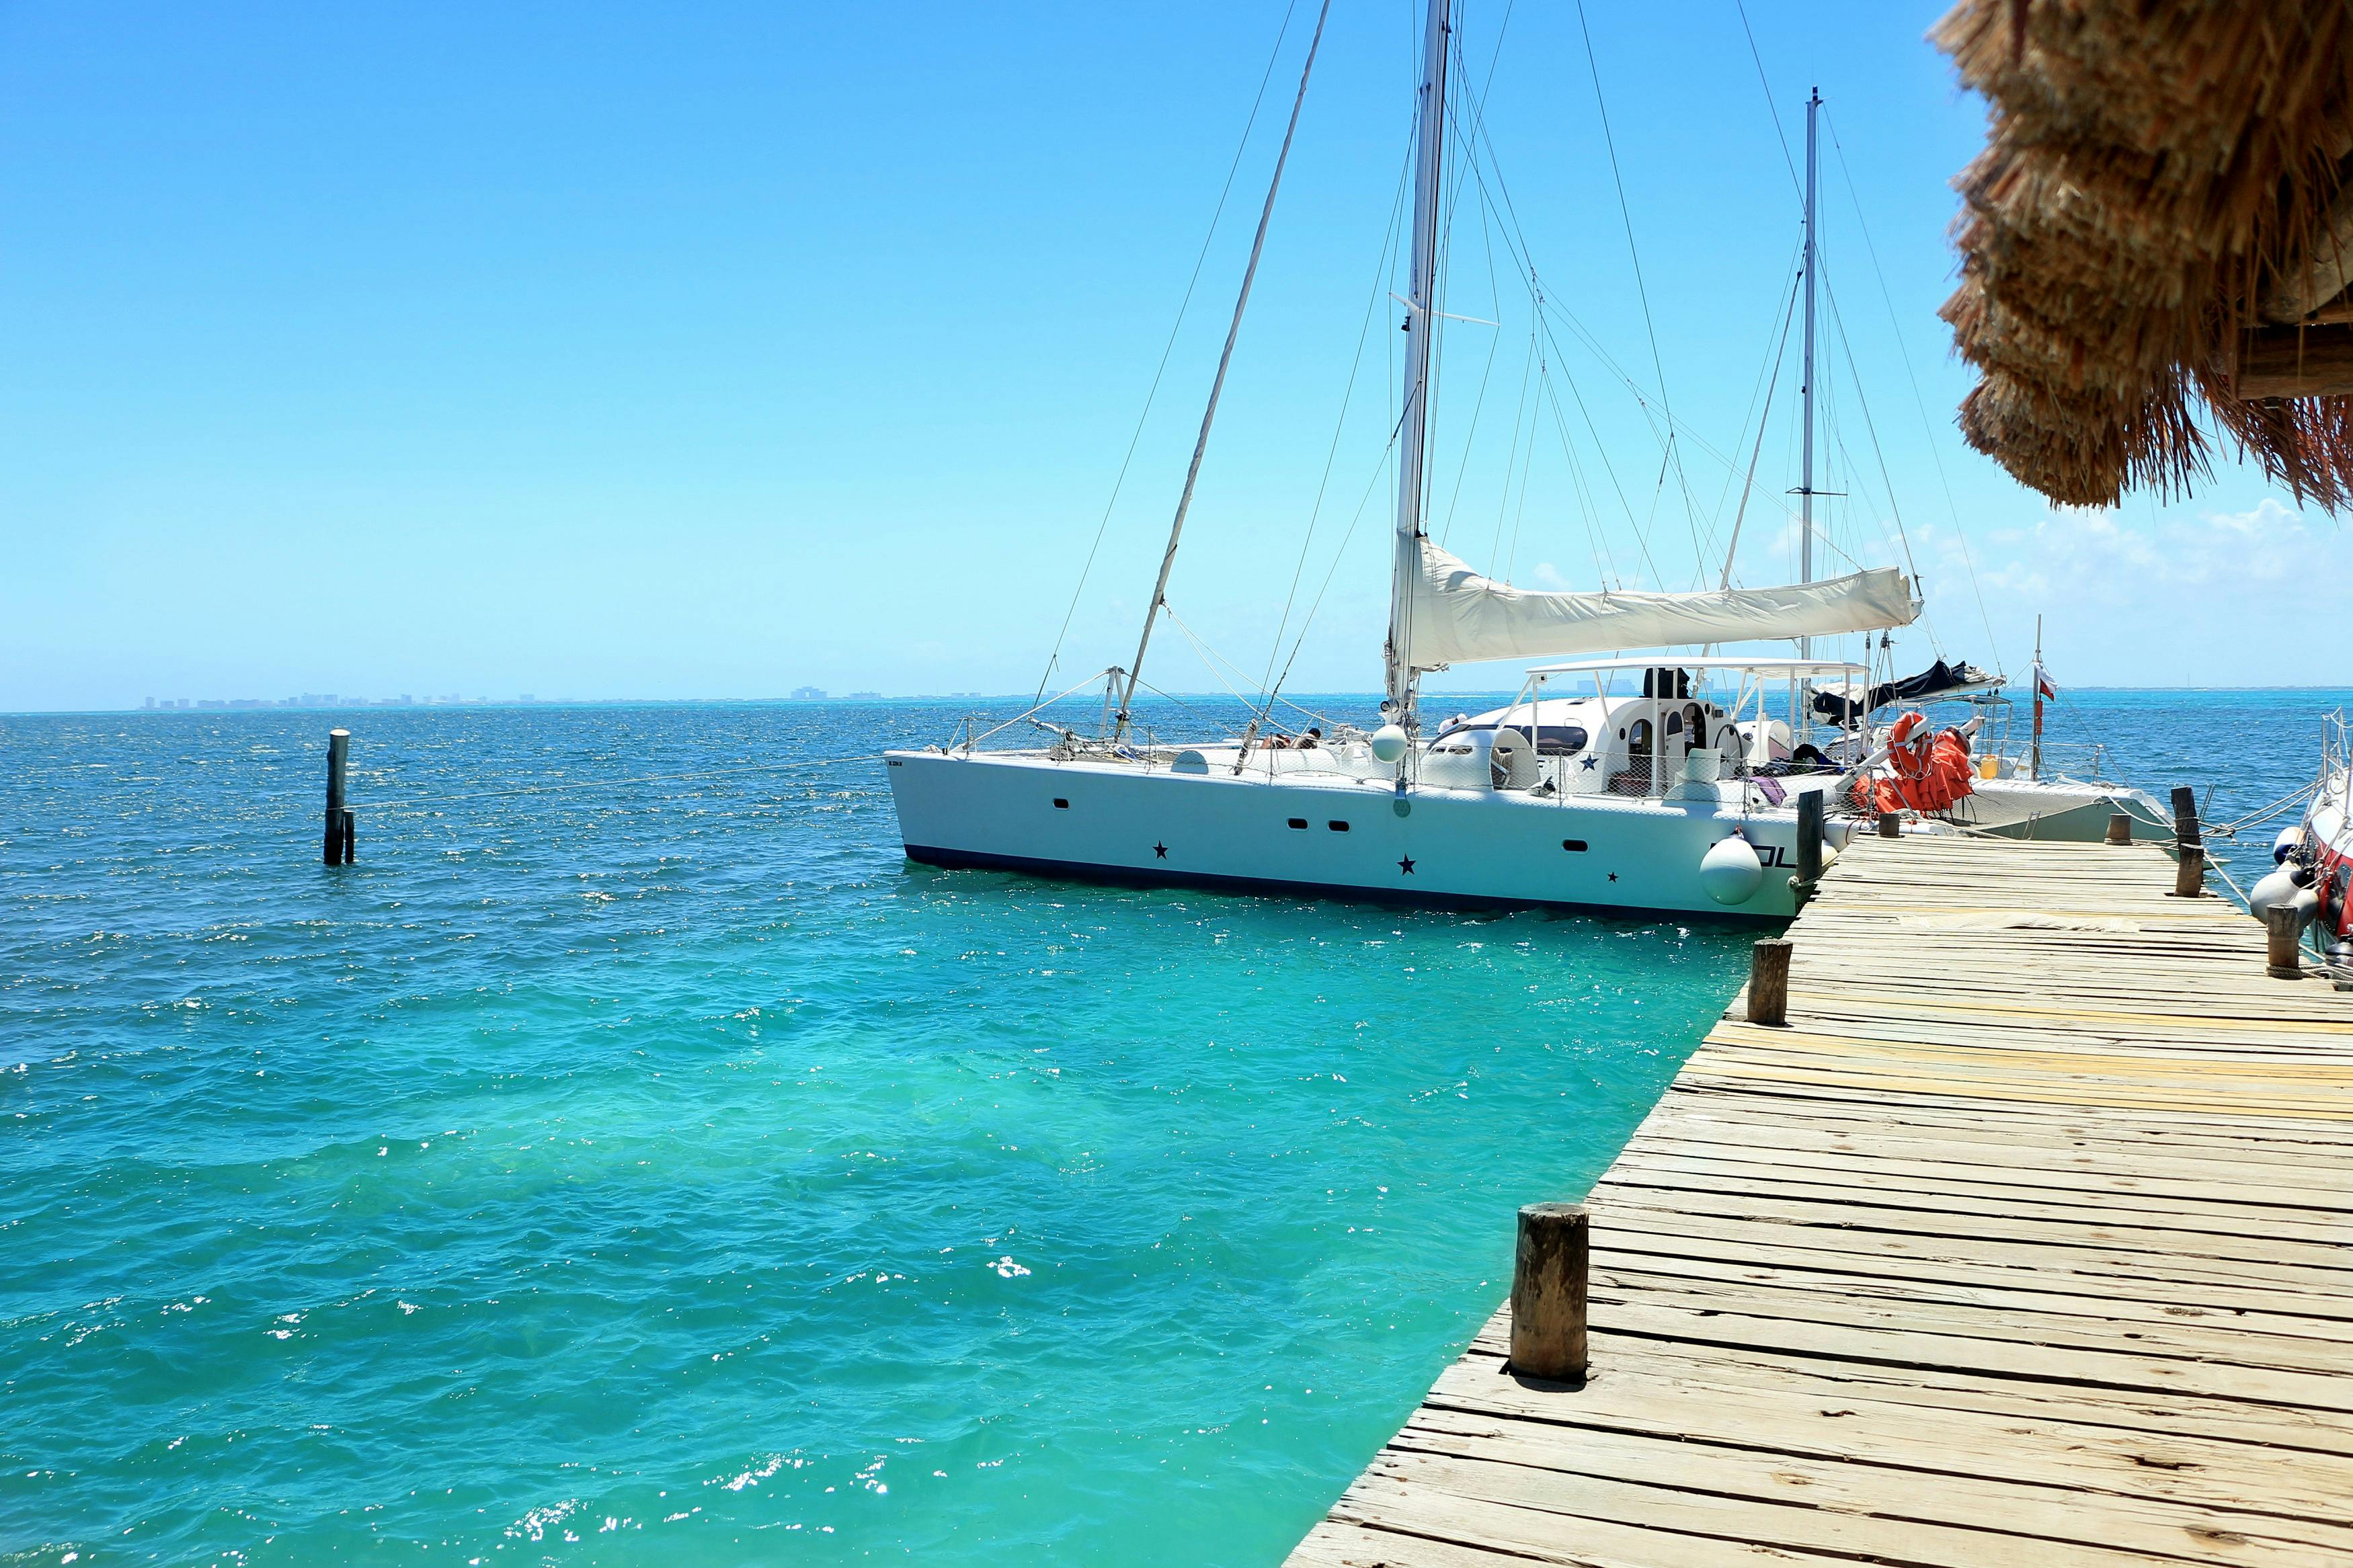 Passeio de barco de dia inteiro pela Isla Mujeres saindo de Cancún